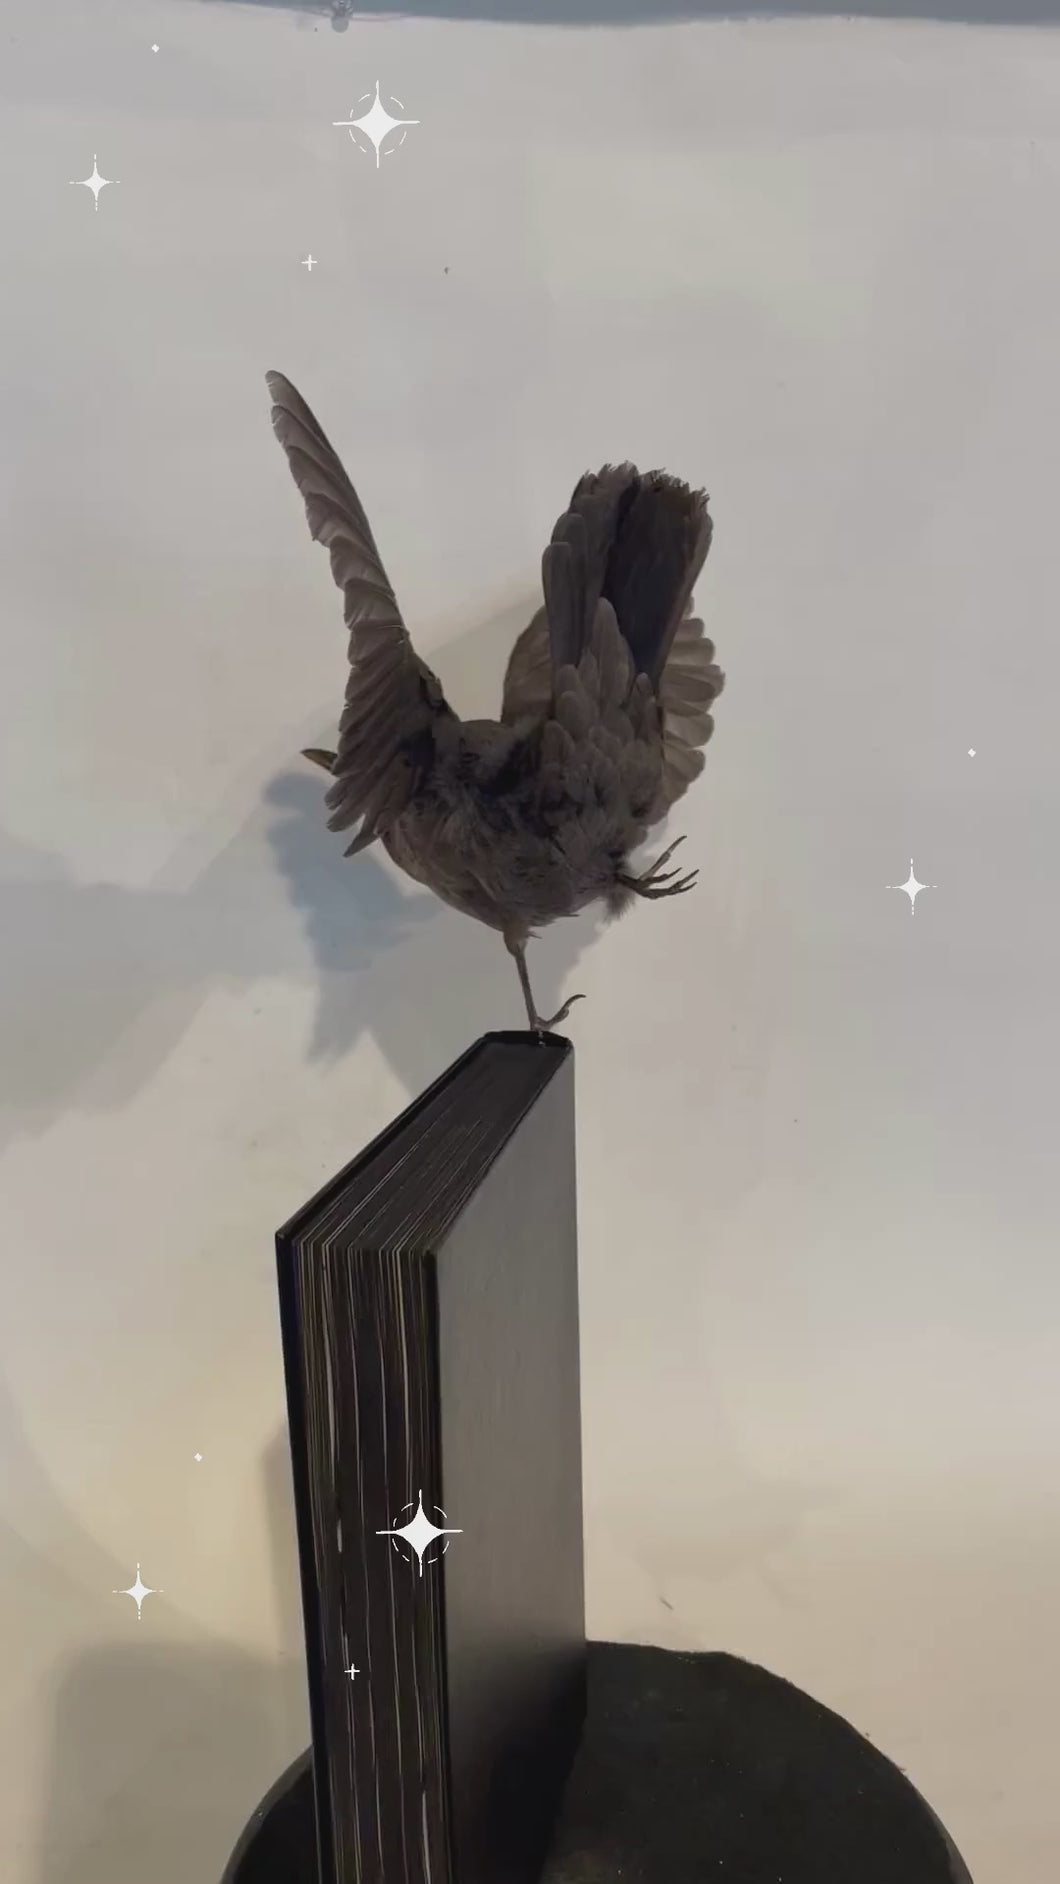 Female Blackbird on Black Book (takes flight) by Antoinette Ratcliffe